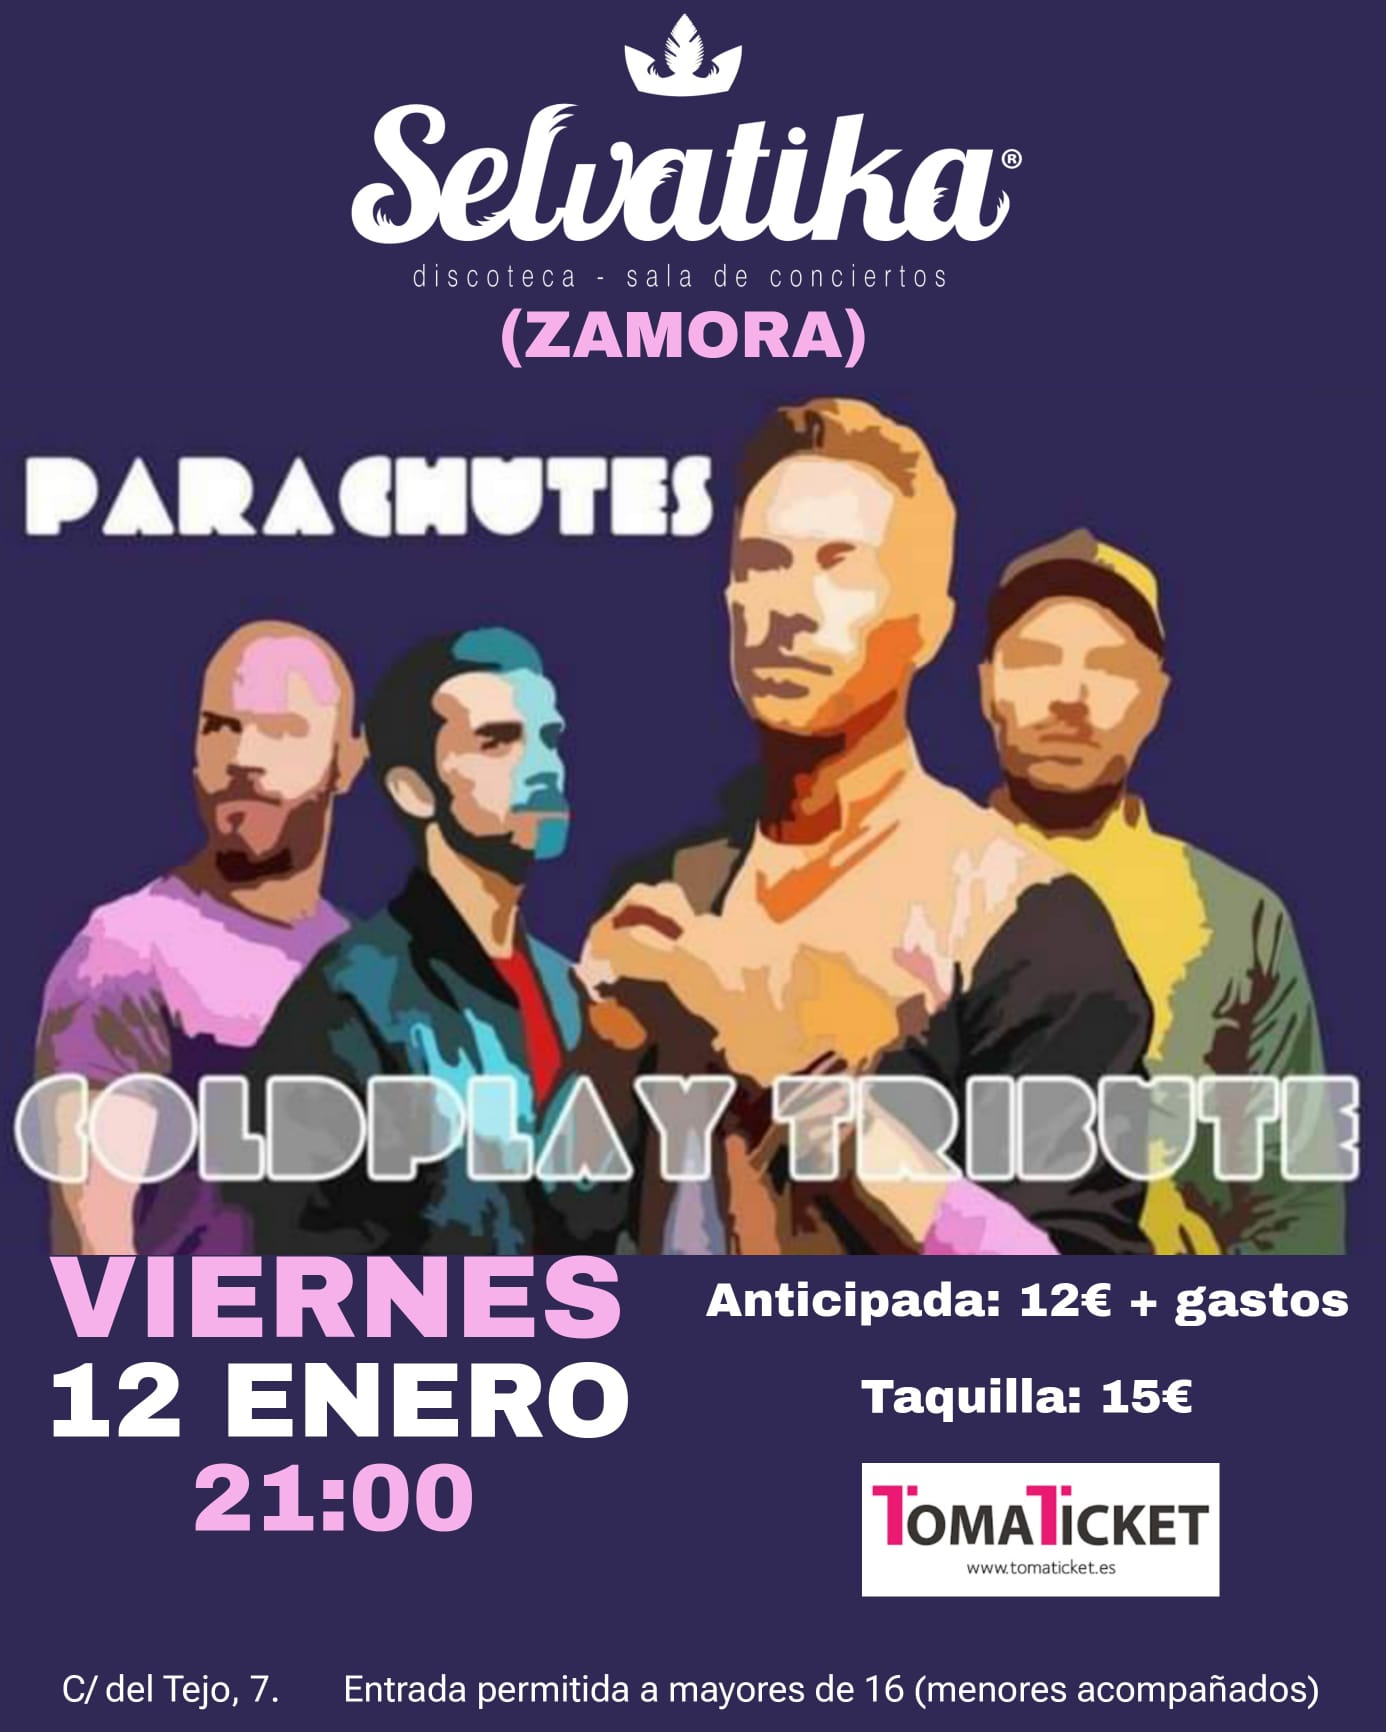 Parachutes, Coldplay tribute en Zamora